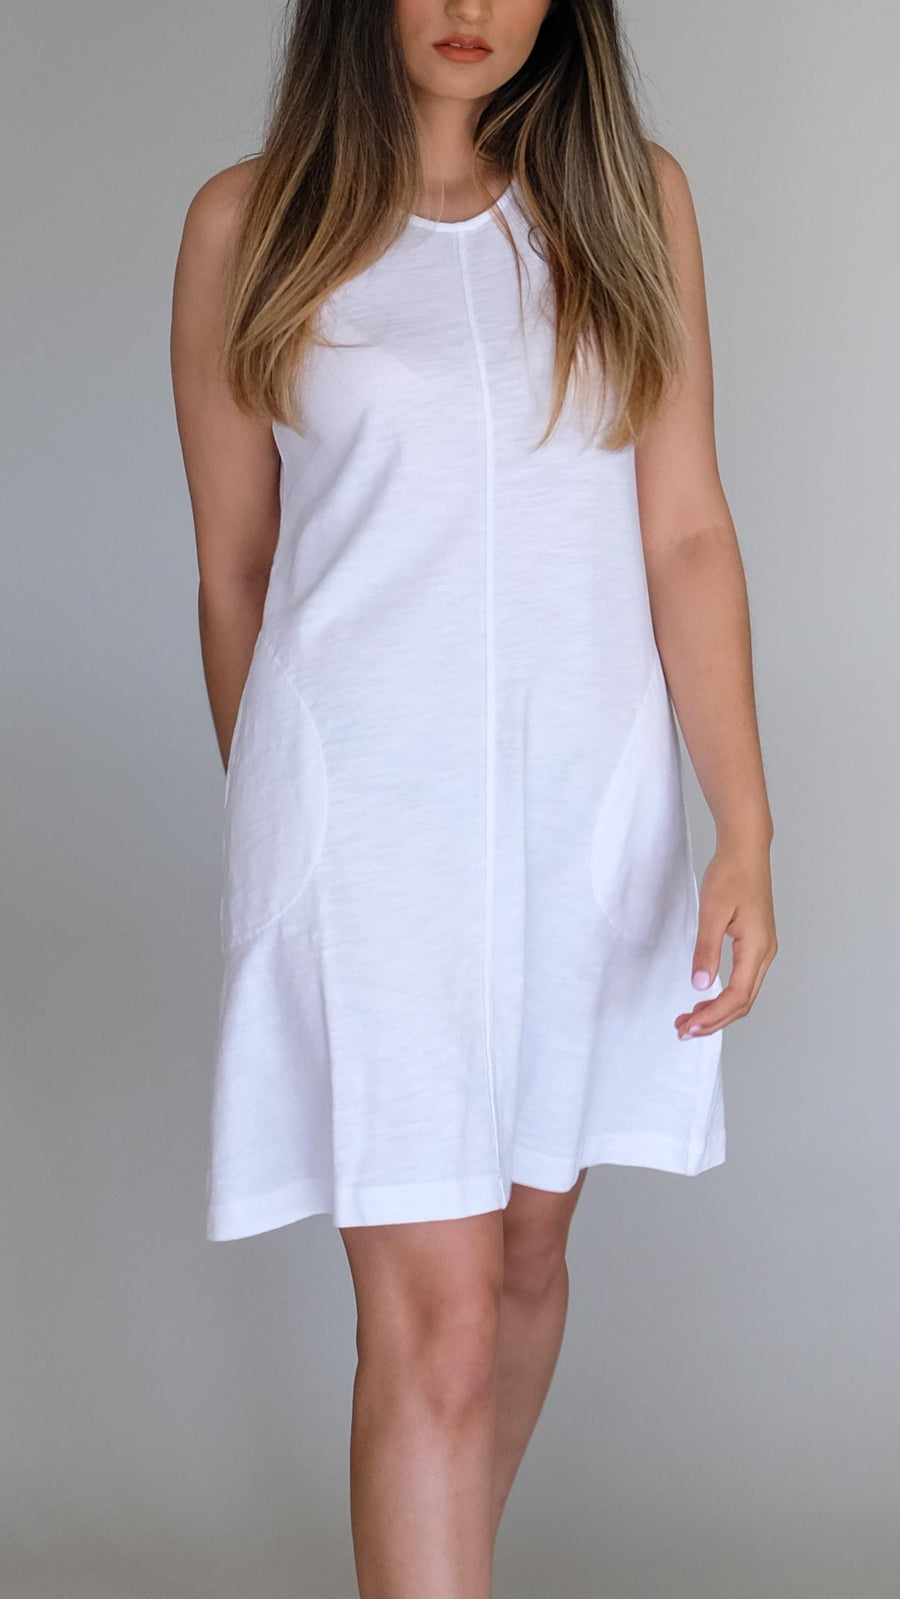 White A-Line Dress by Nation LTD